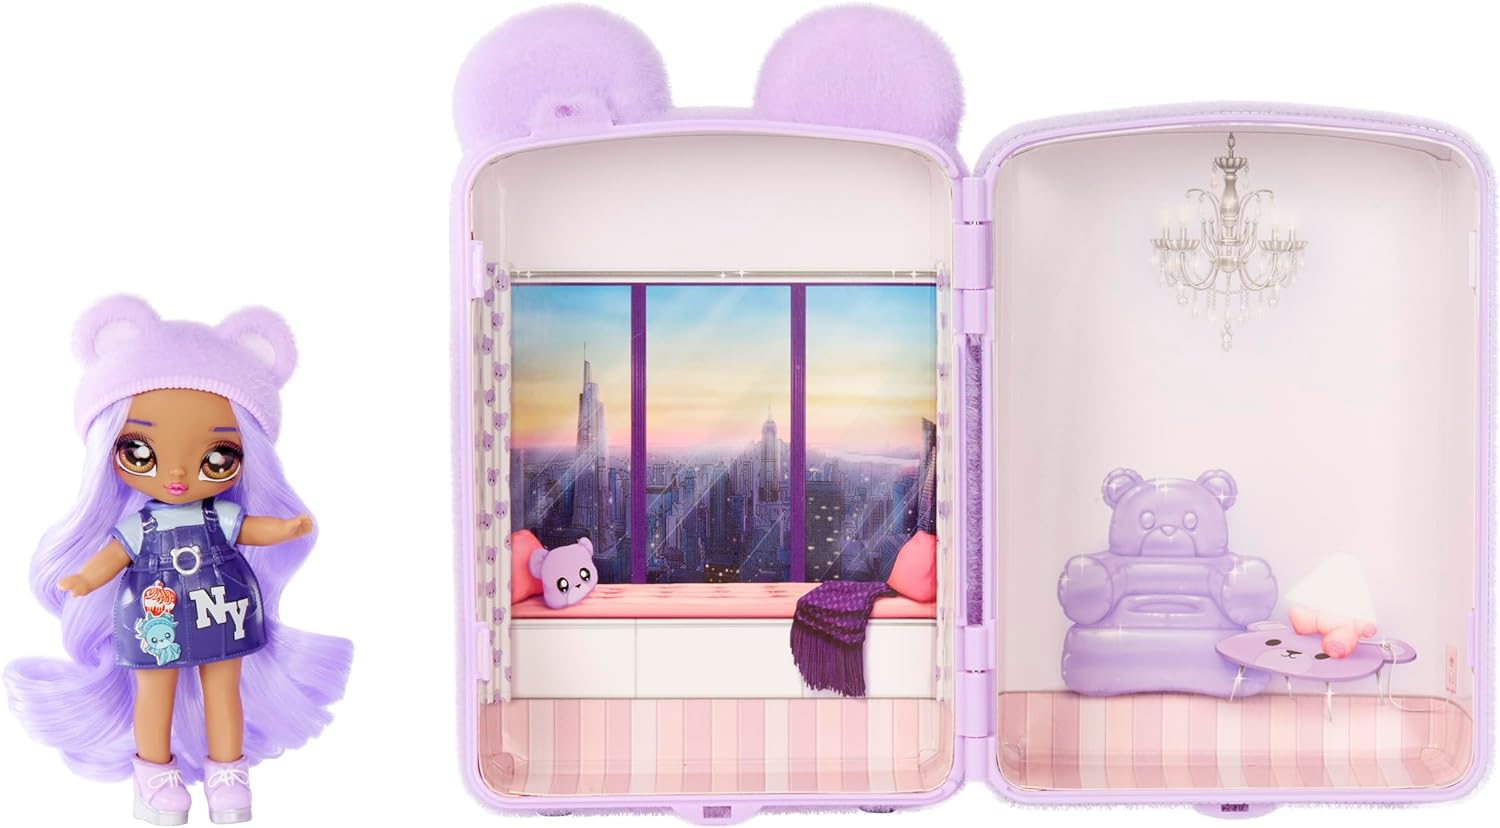 Na! Na! Na! Surprise Mini Backpack Bedroom Lizzy York Fashion Doll, Fuzzy Purple Bear Backpack, Gift for Kids